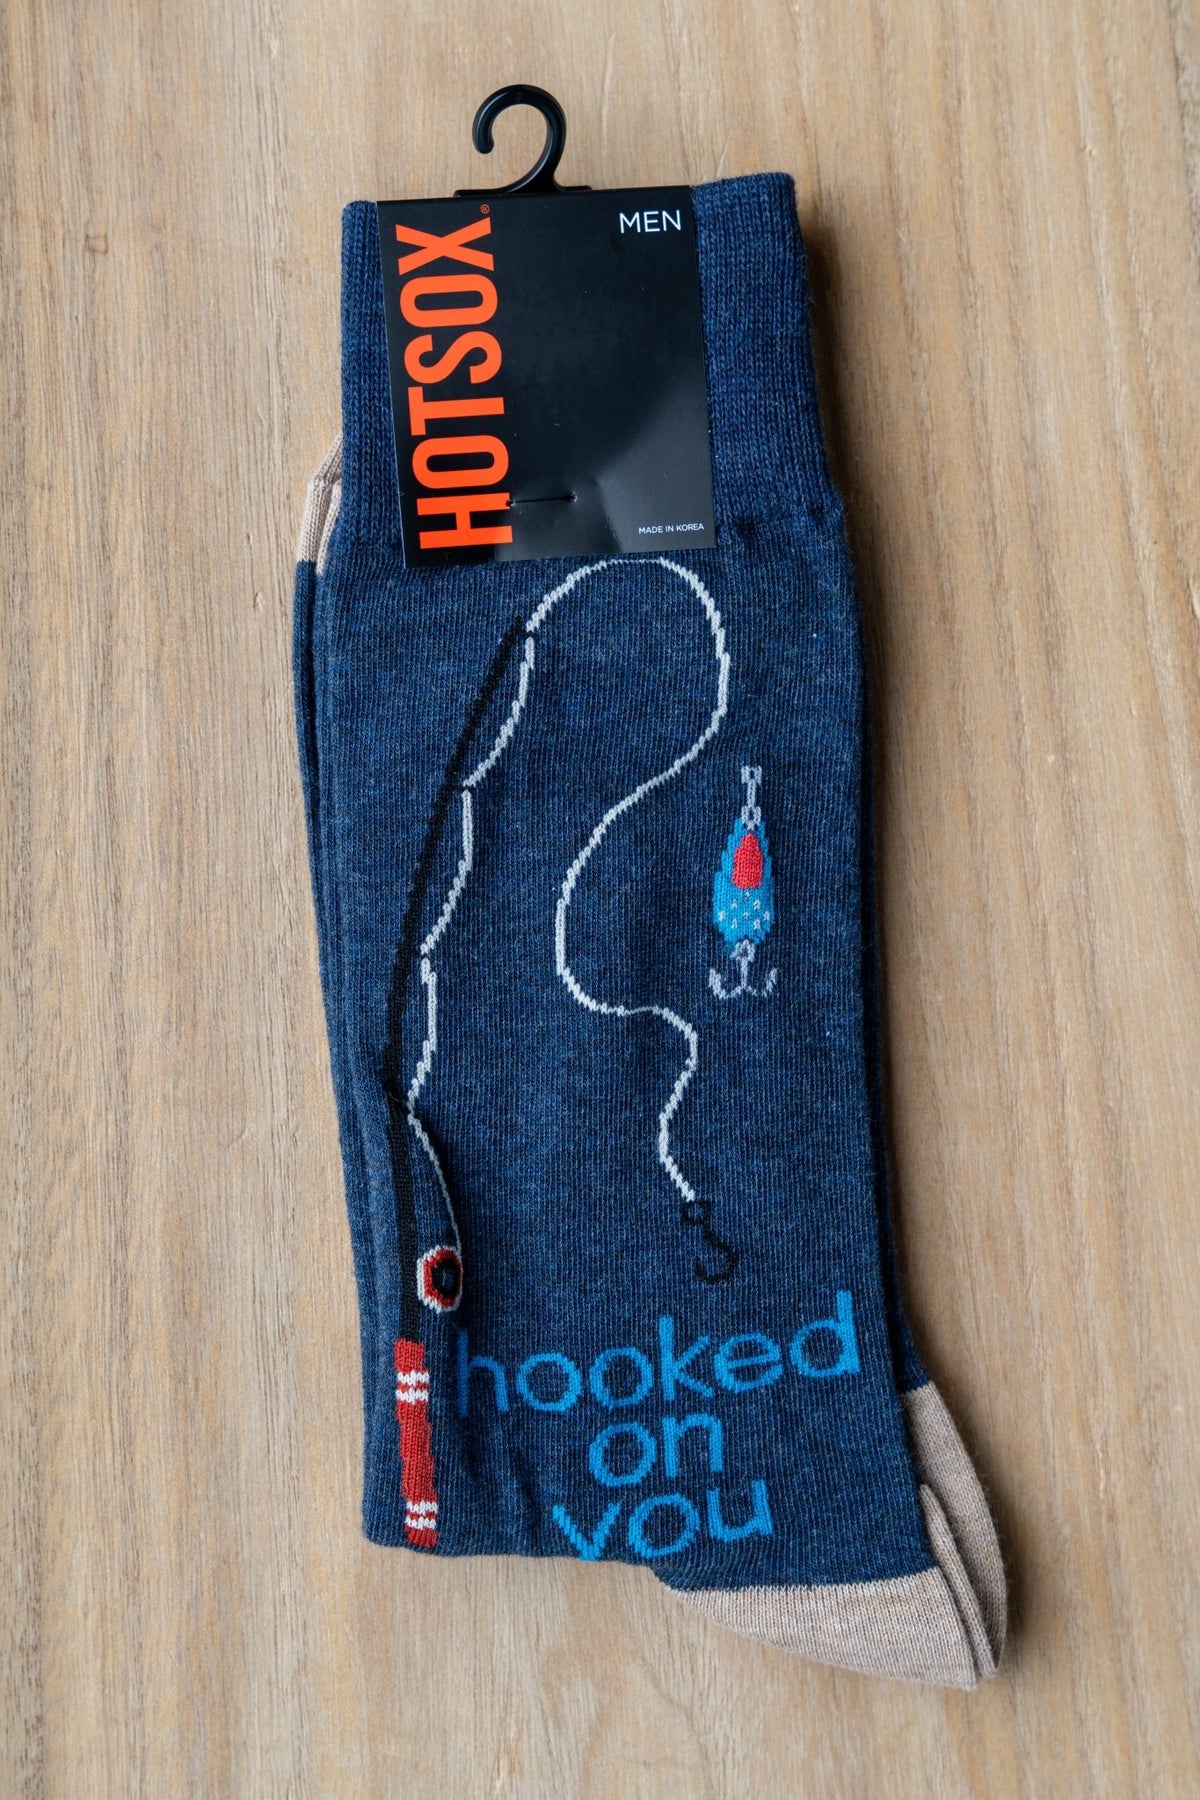 HotSox hooked on you fishing socks denim - Trendy Socks at Lush Fashion Lounge Boutique in Oklahoma City